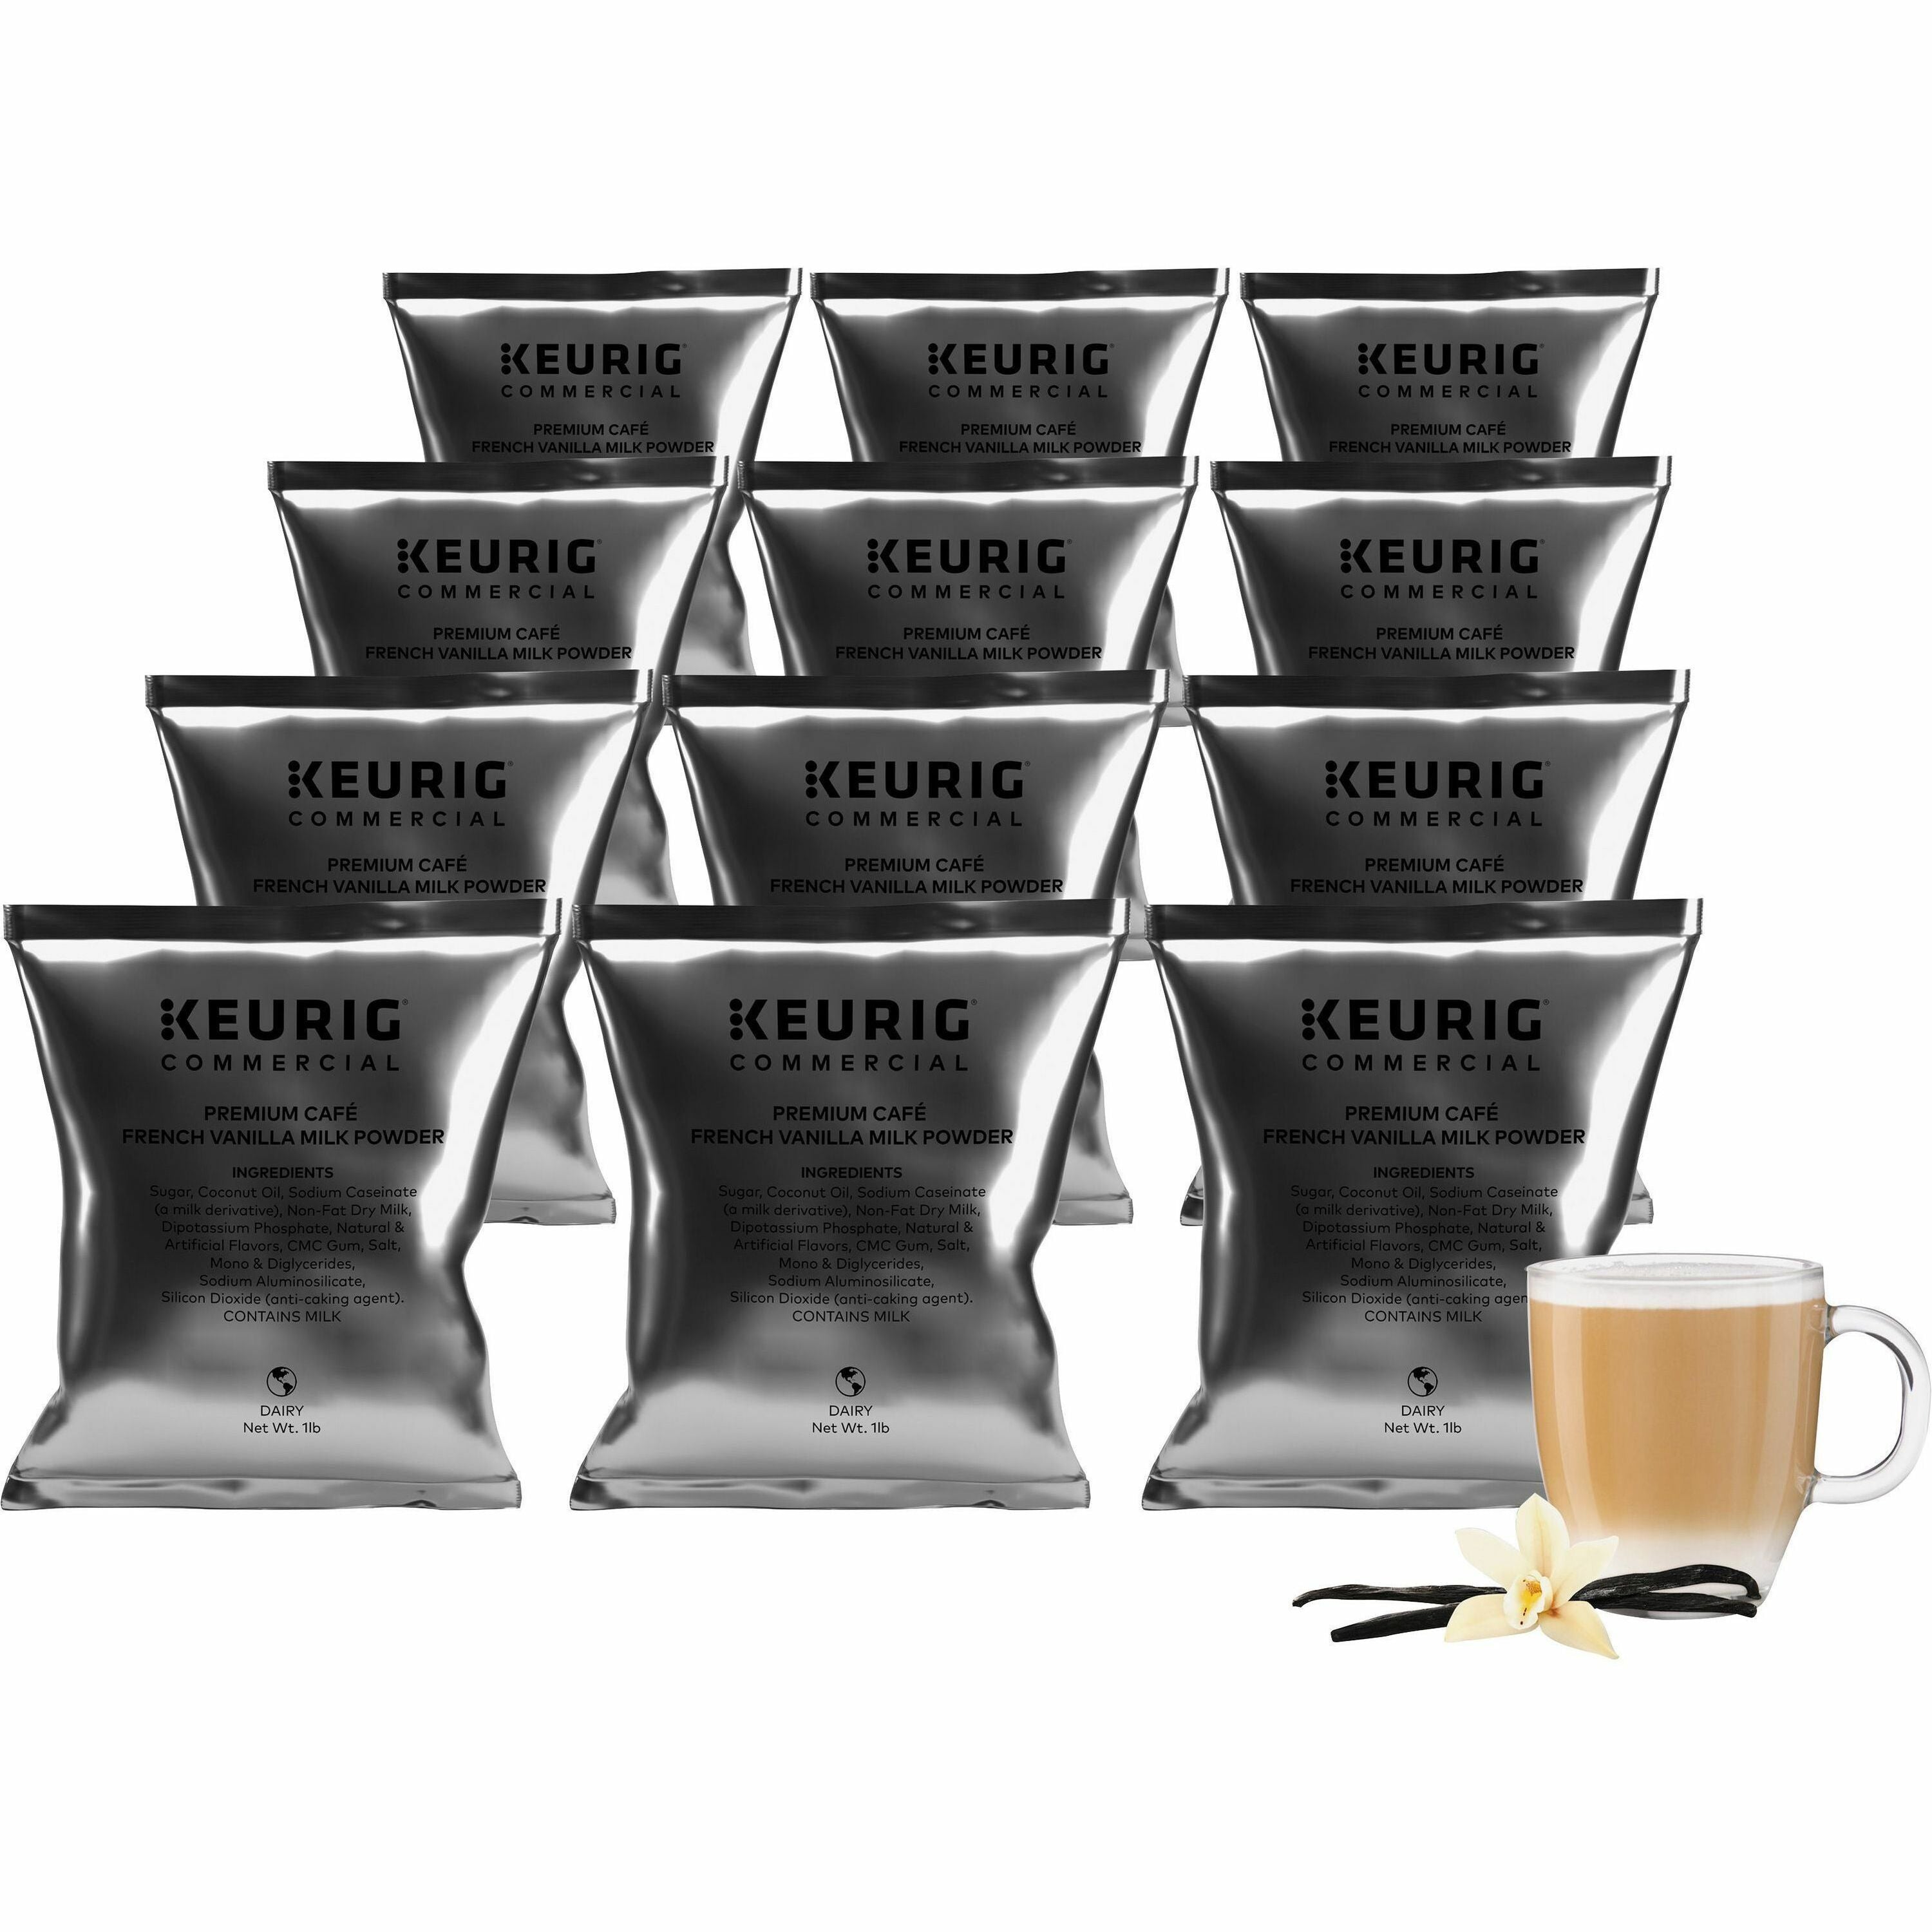 green-mountain-coffee-roasters-premium-cafe-french-vanilla-powder-french-vanilla-flavor-12-carton_gmt9794 - 1